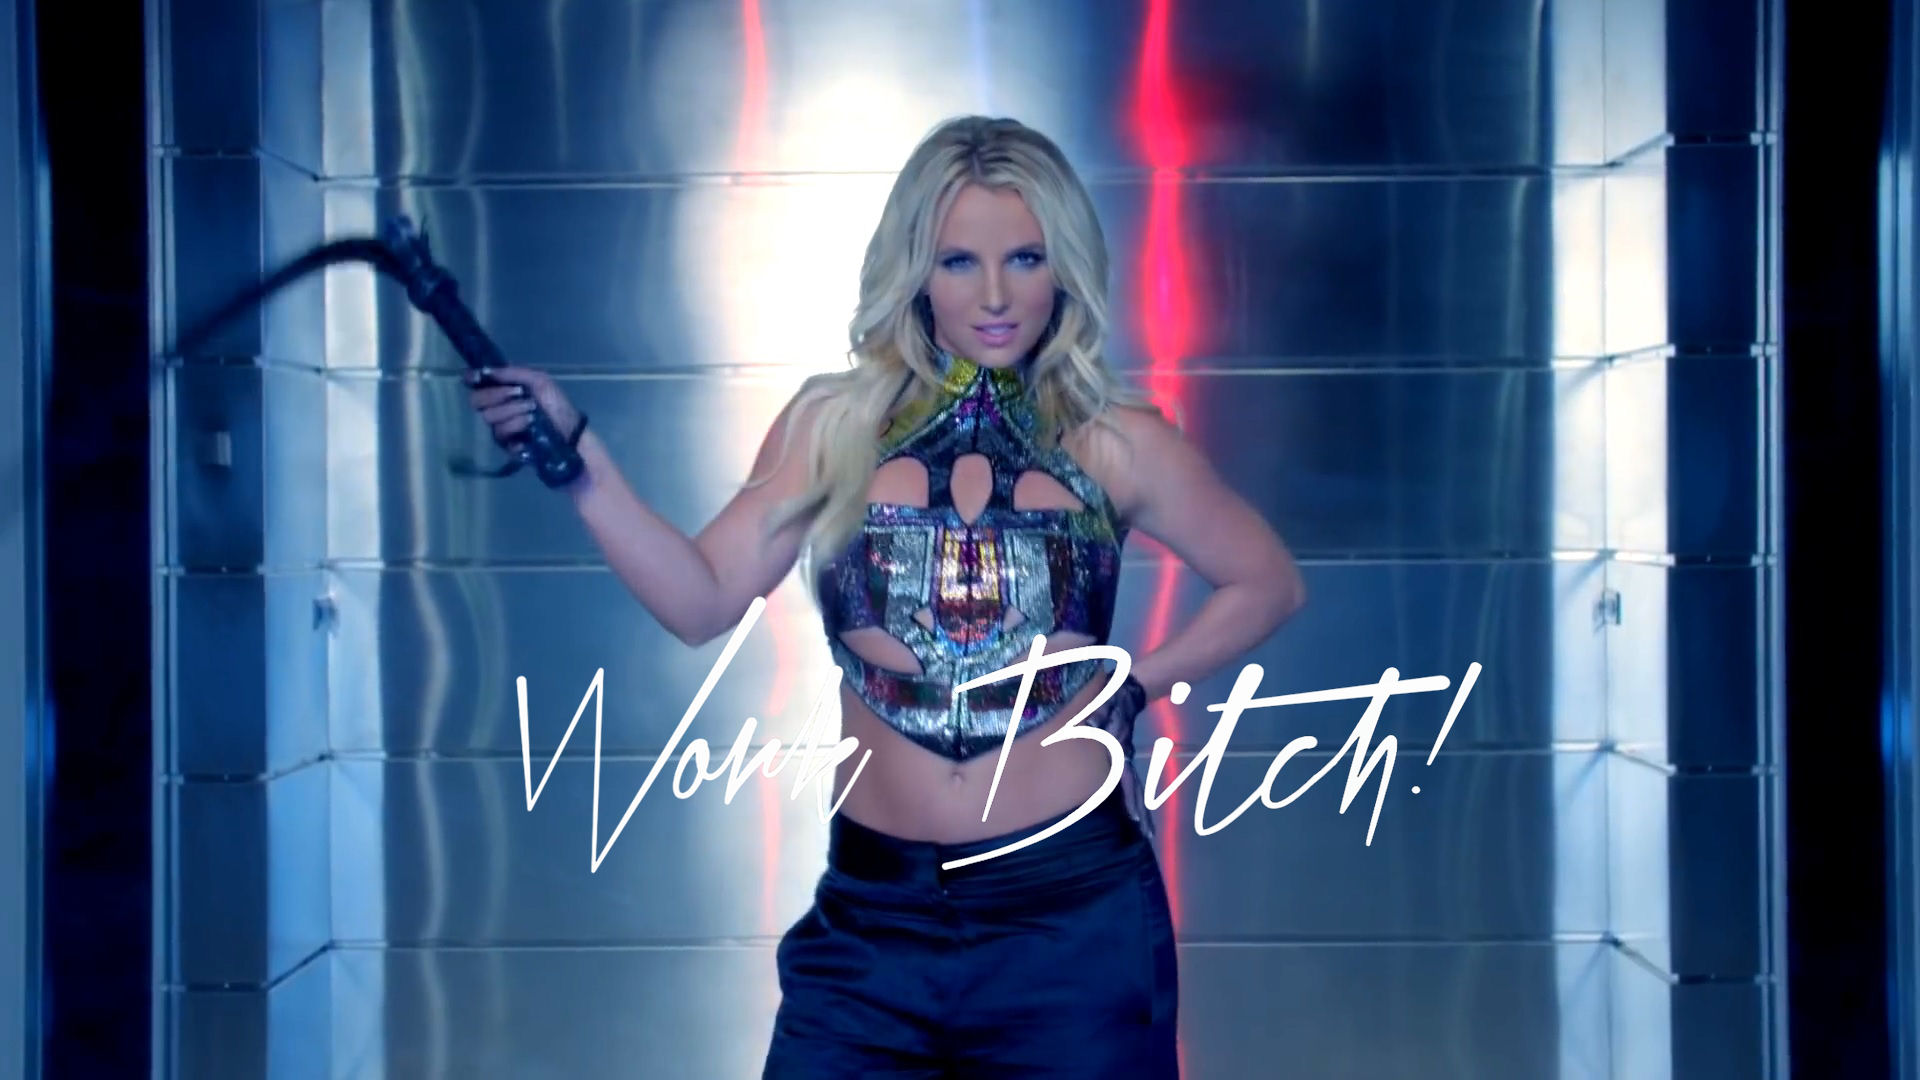 Britney spears work bitch ace paint clark kensington flat ceiling white